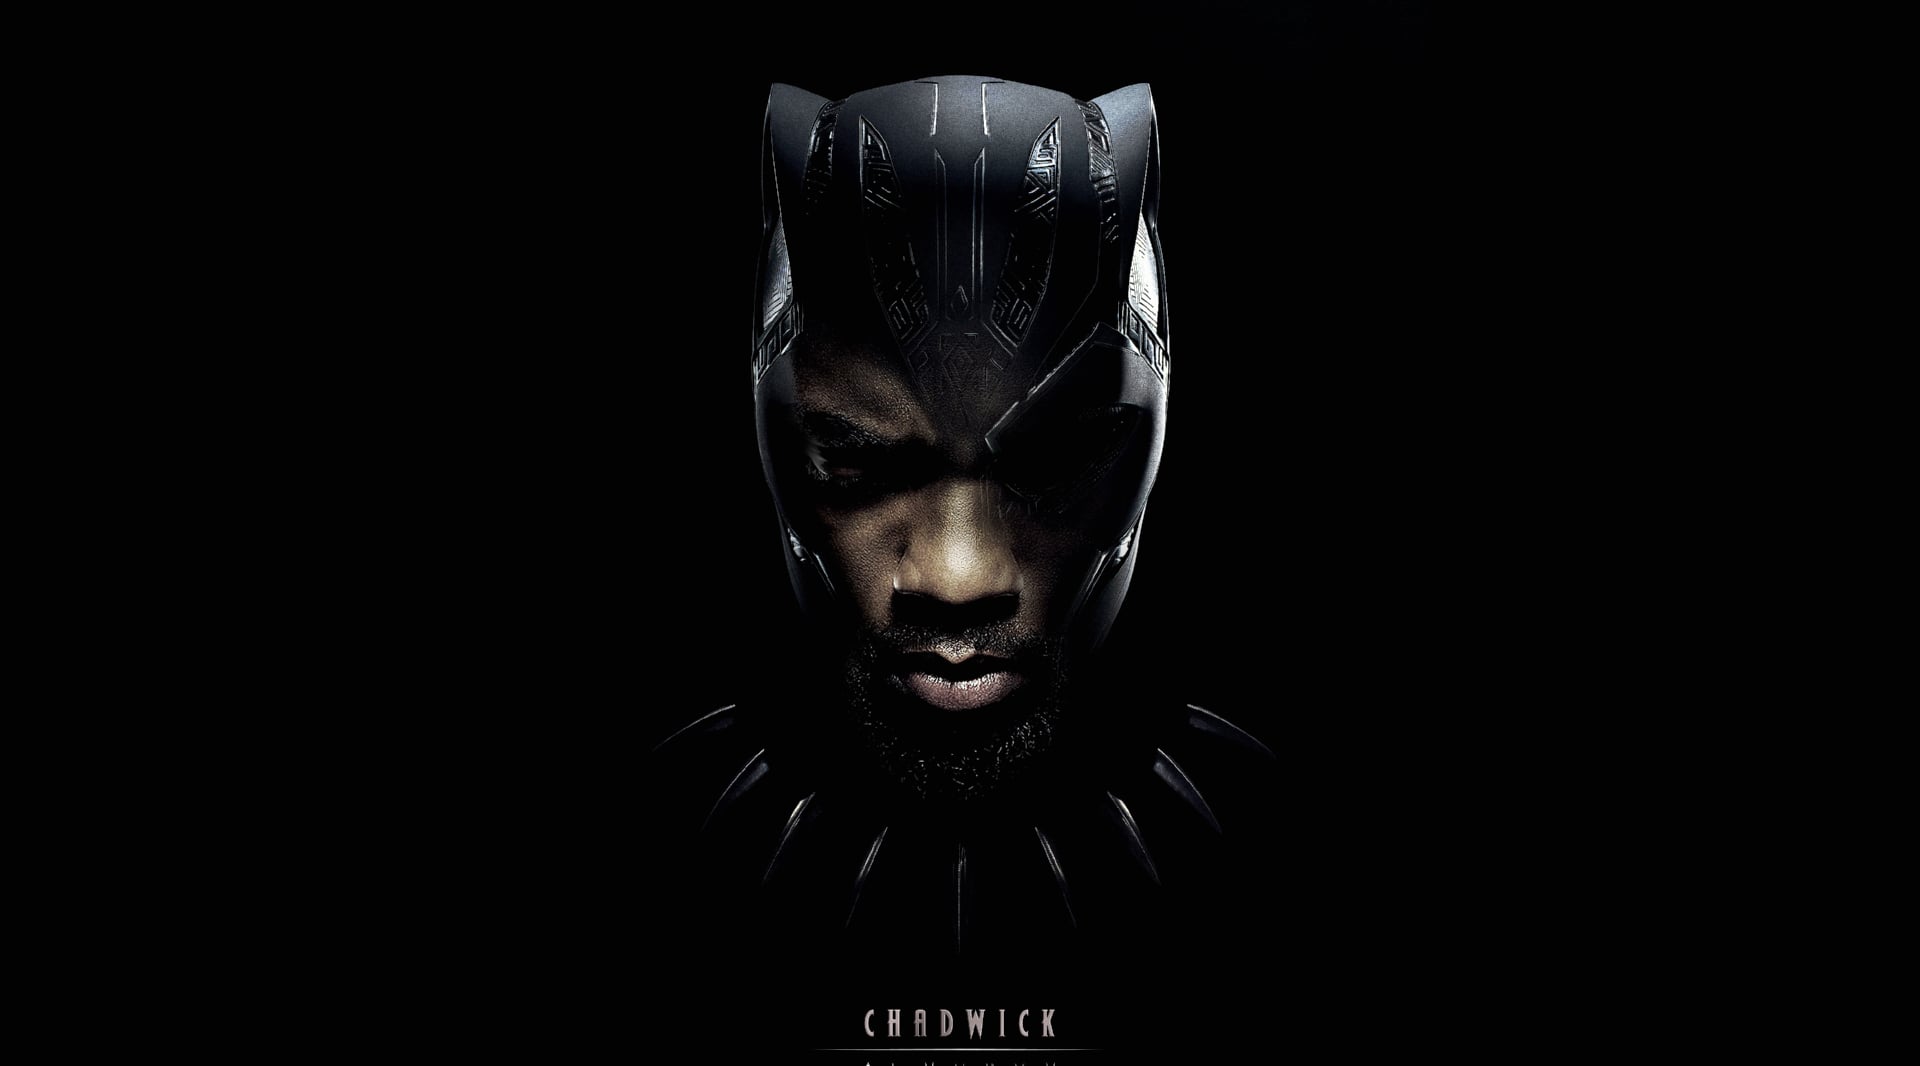 Chadwick Boseman as Black Panther at 1024 x 768 size wallpapers HD quality